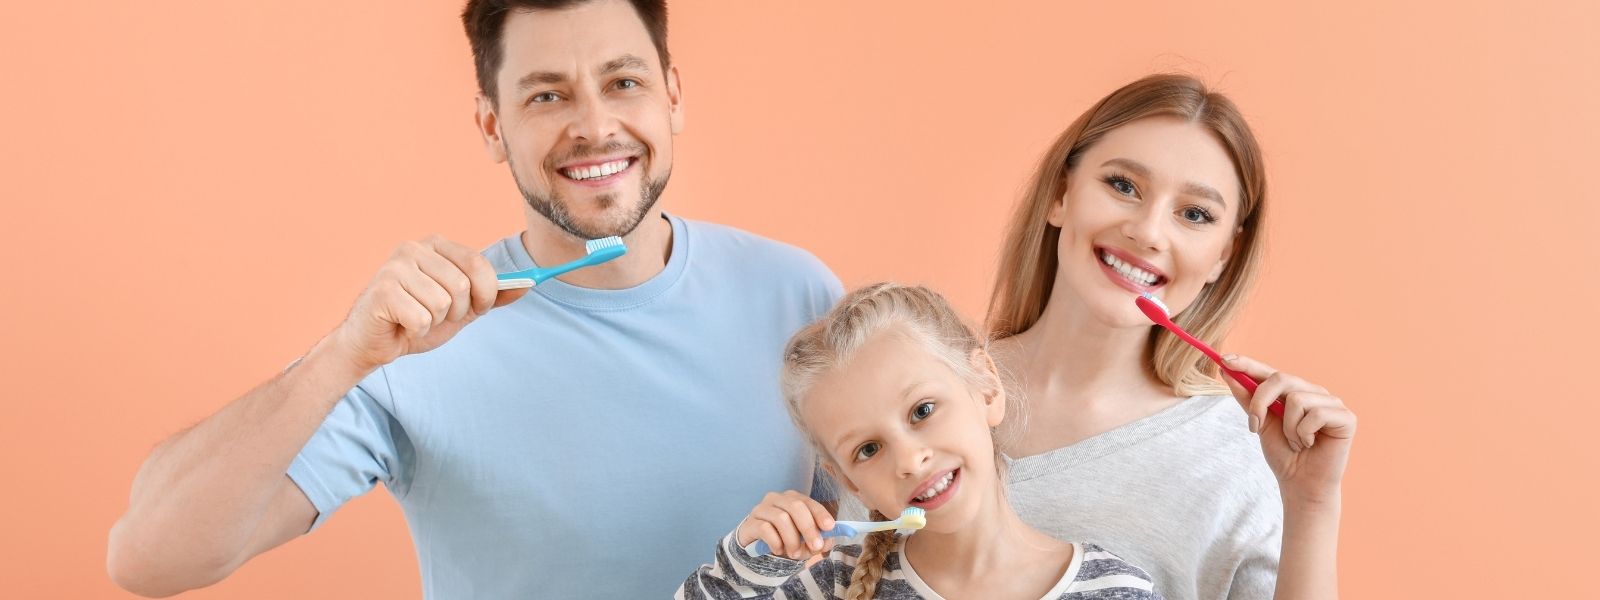 Happy family brushing teeth